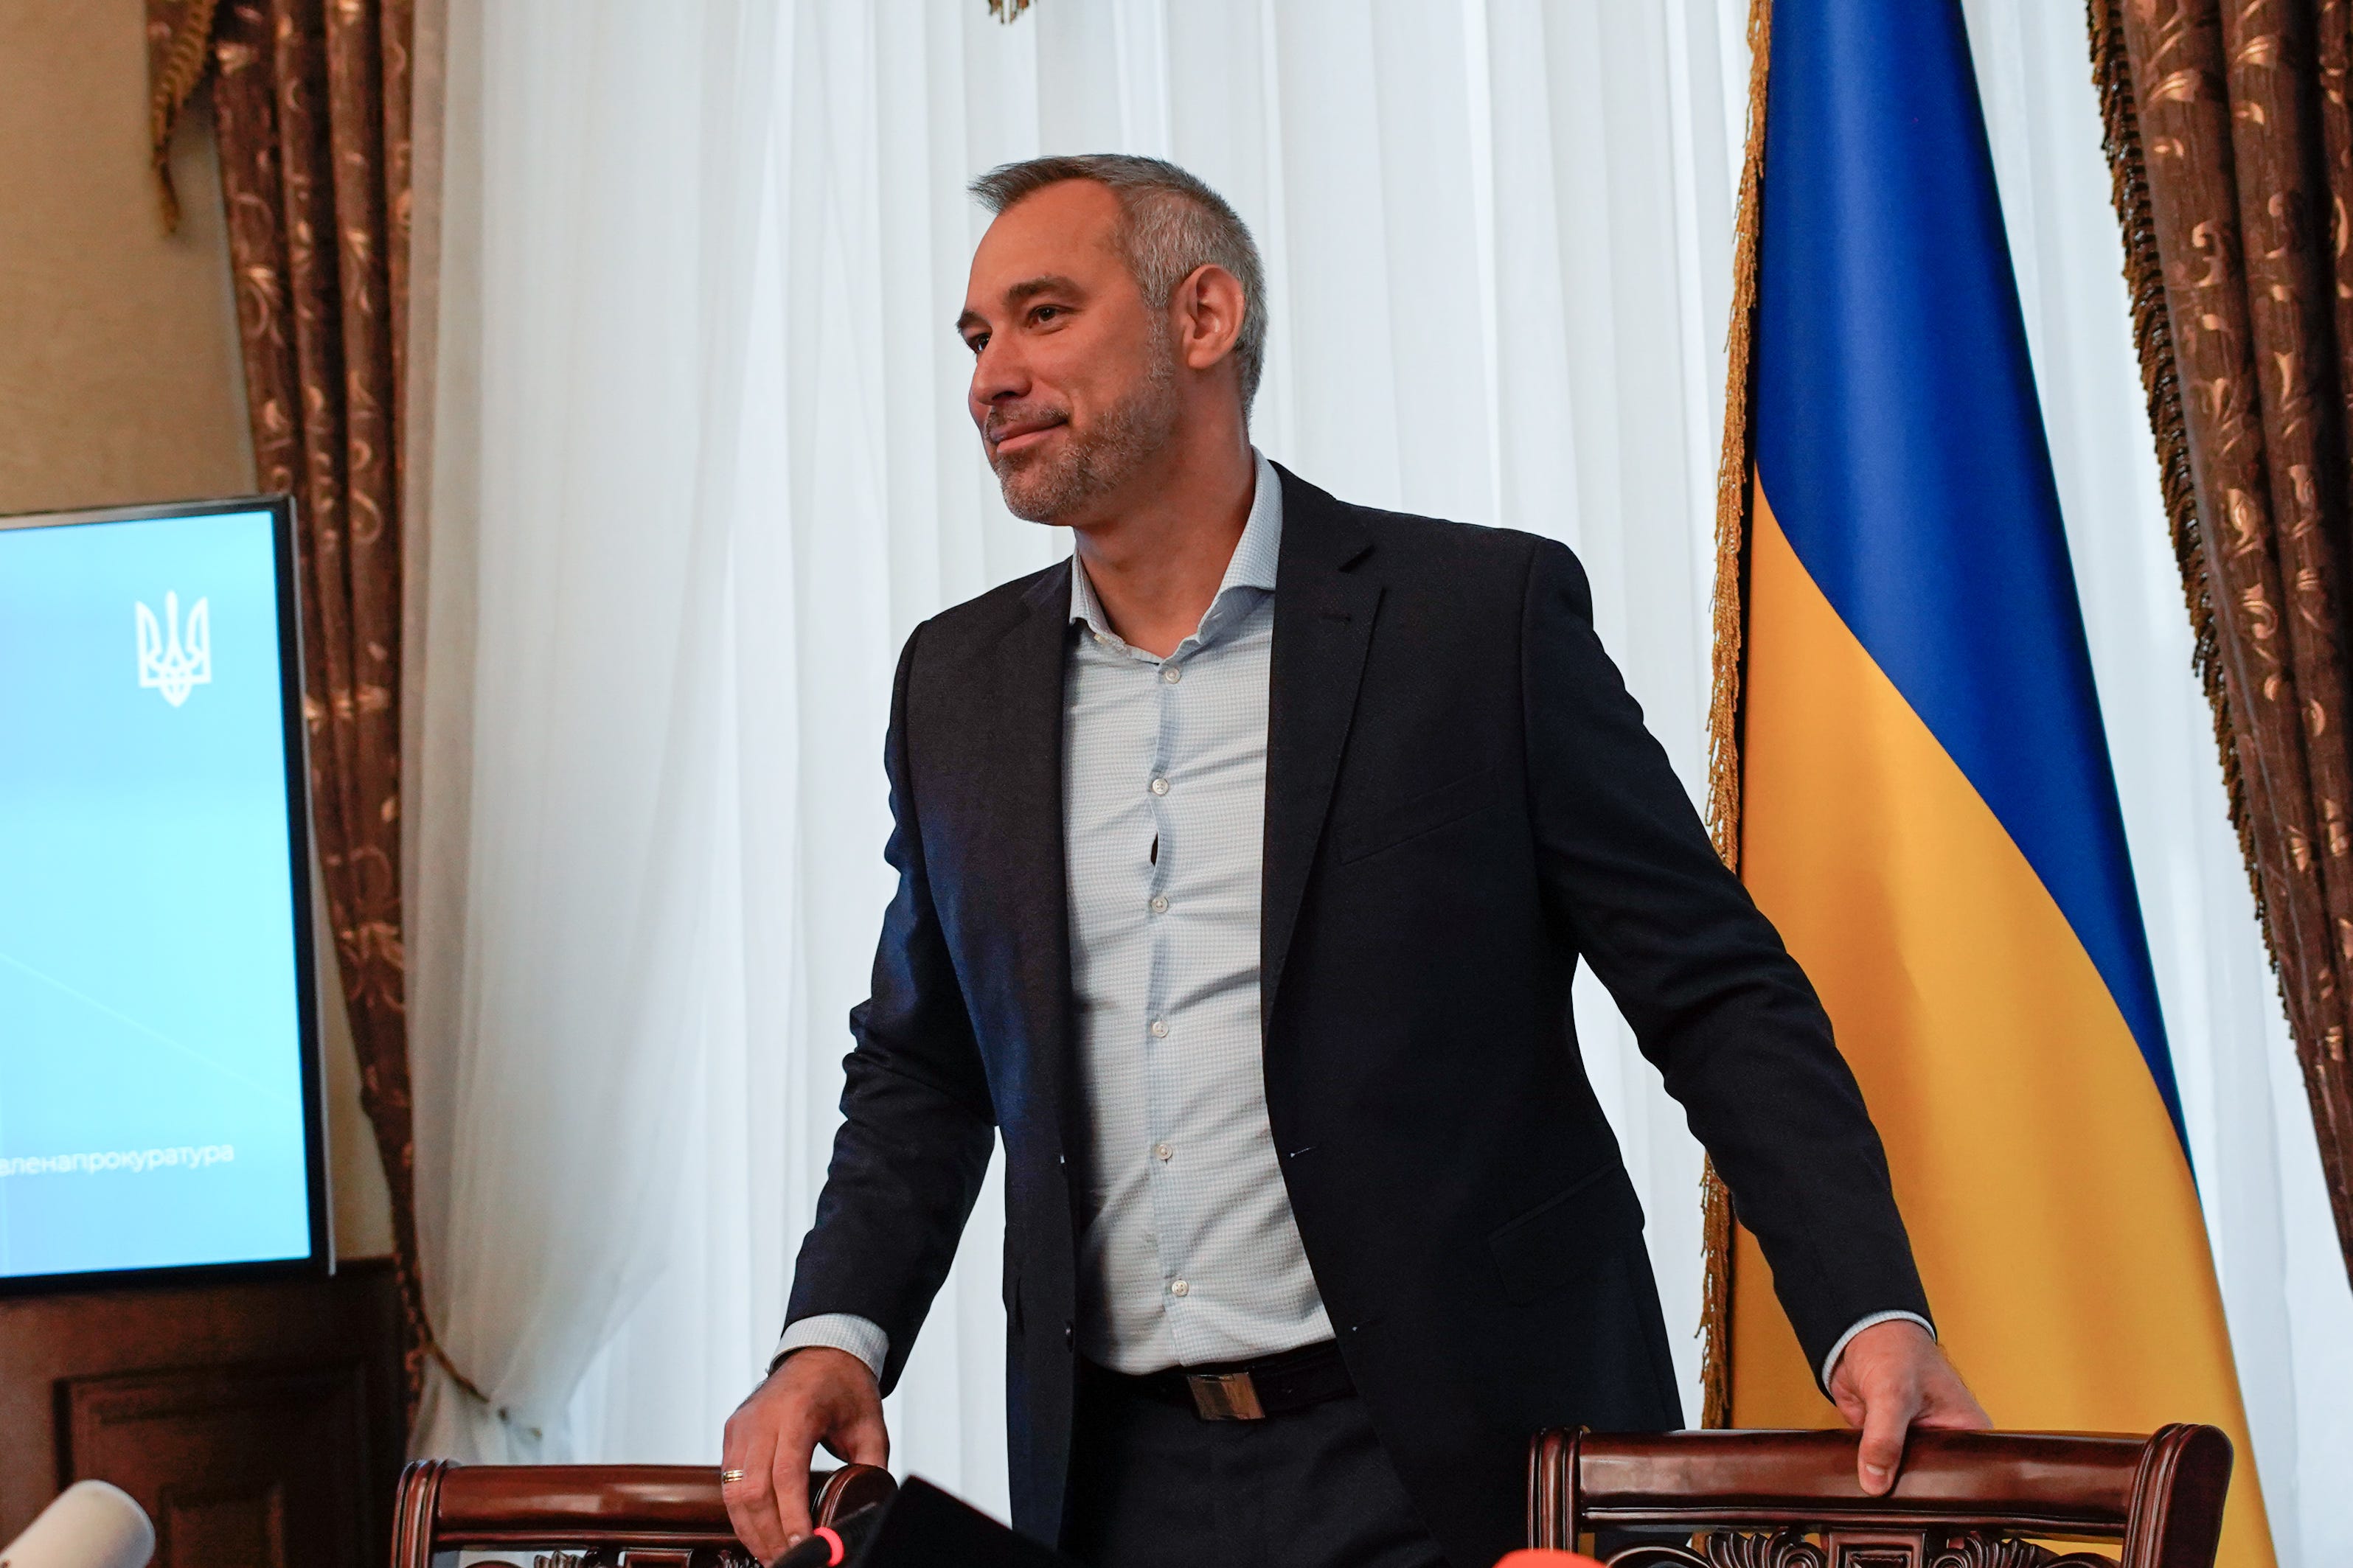 Ukraine's new general prosecutor, Ruslan Ryaboshapka, during a press conference in Kyiv on Oct. 4, 2019.